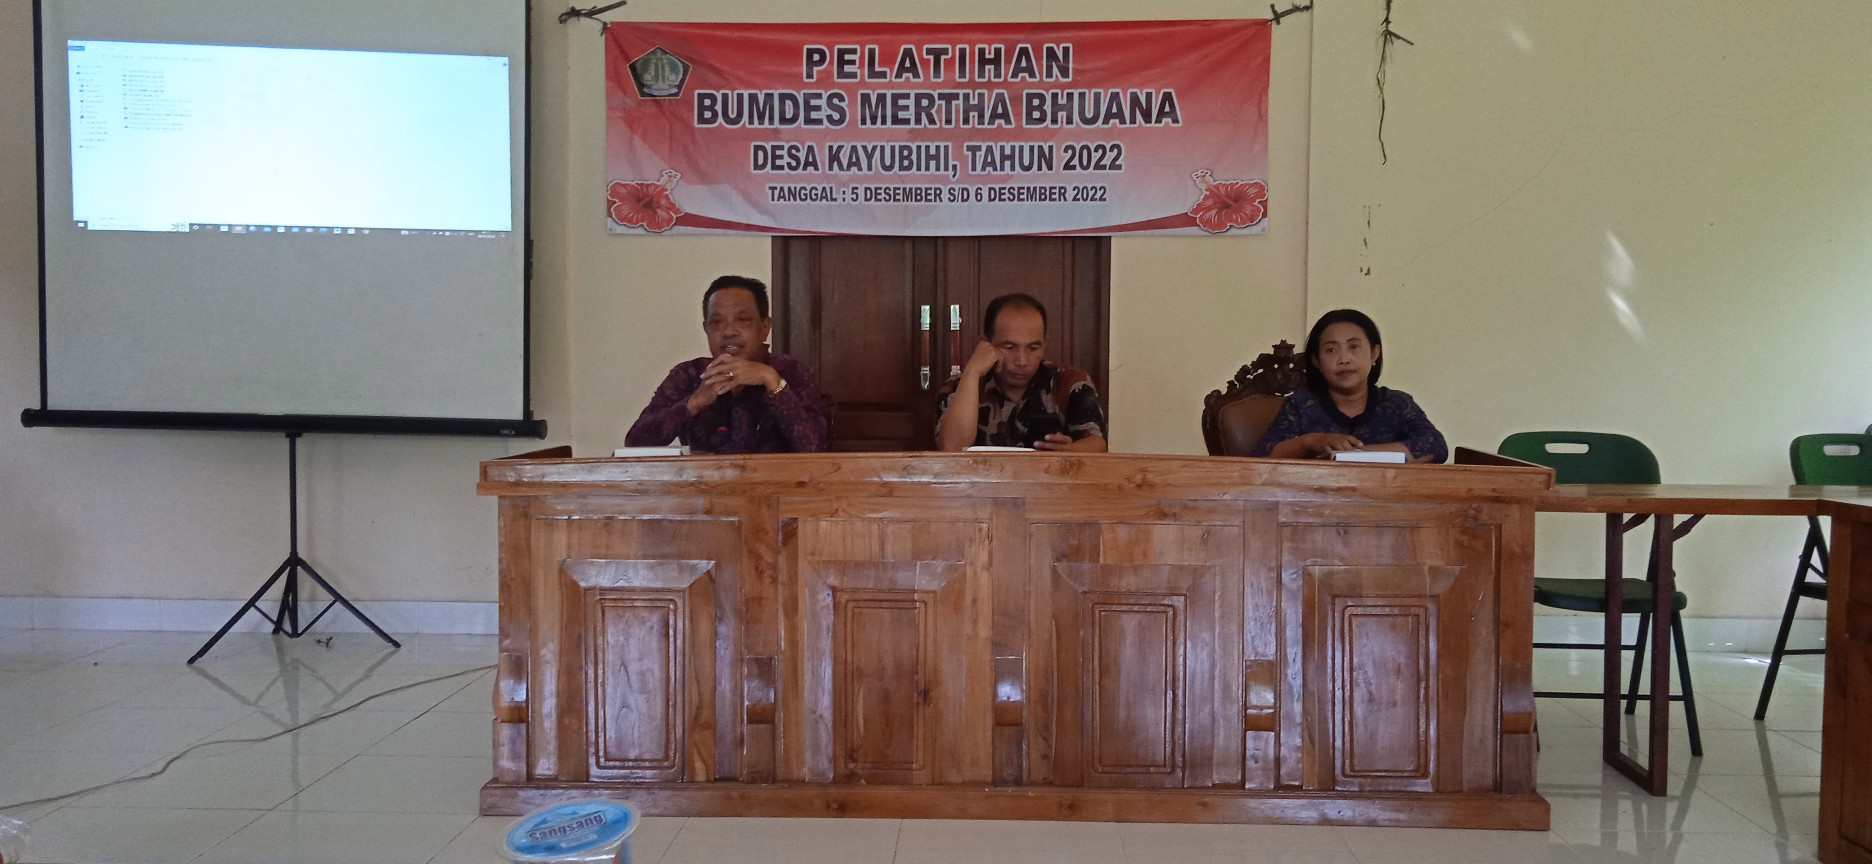 Pelatihan Bumdes Mertha Bhuana Desa Kayubihi Tahun 2022